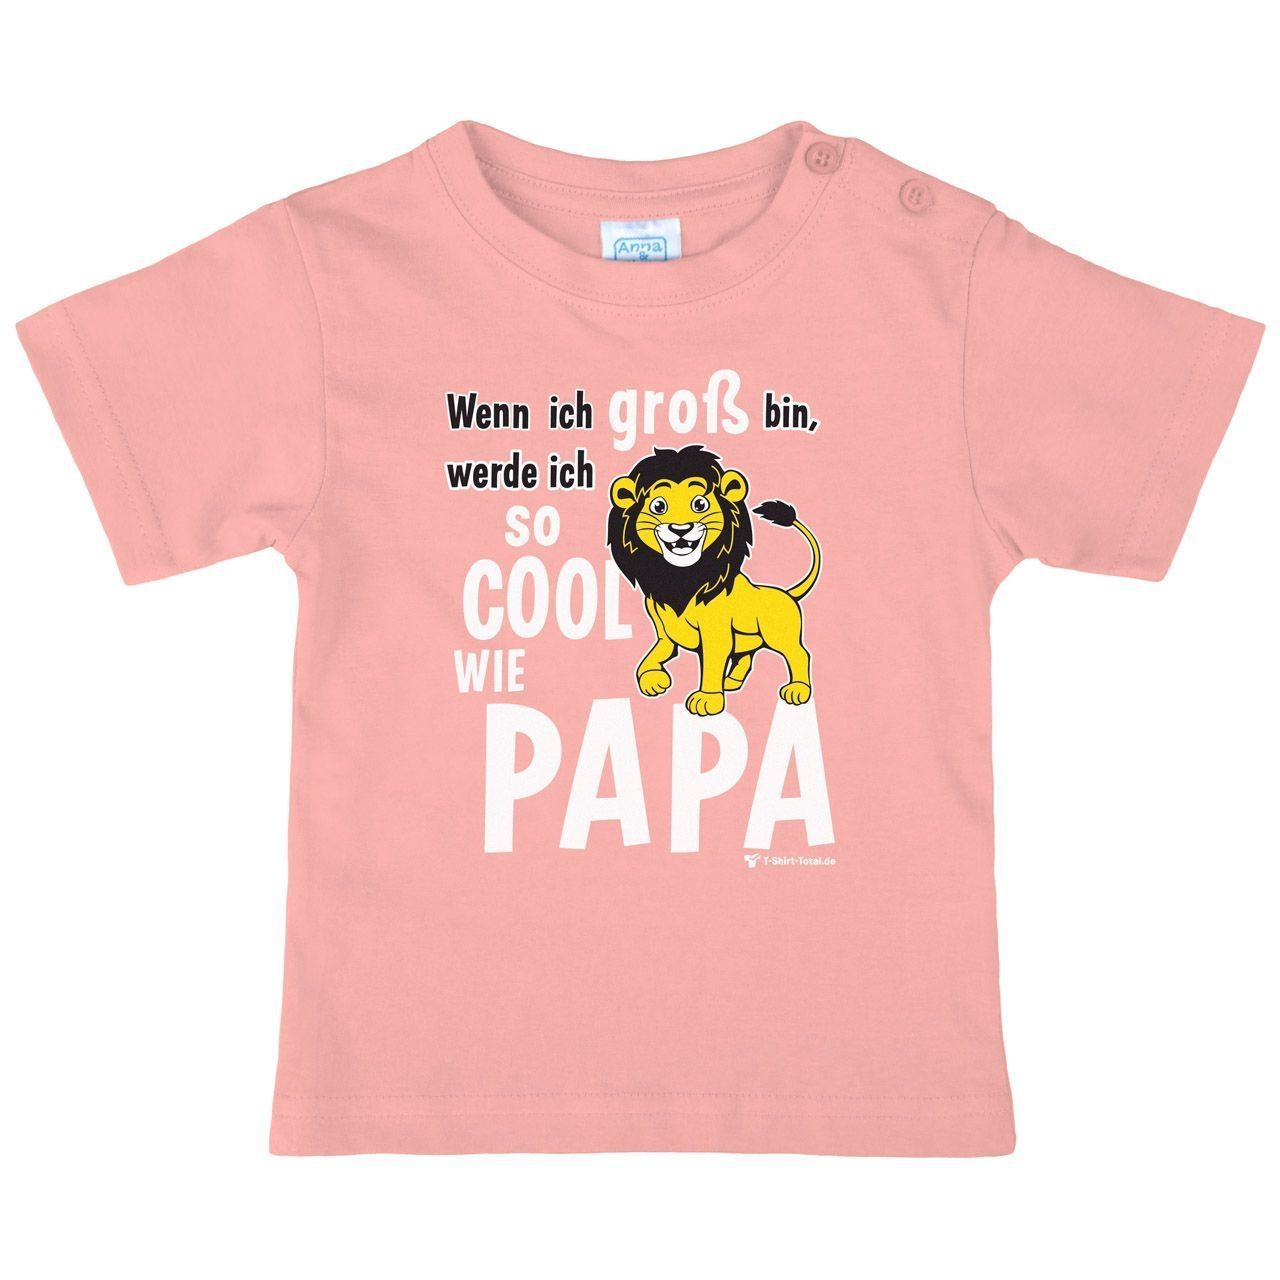 Cool wie Papa Löwe Kinder T-Shirt rosa 68 / 74